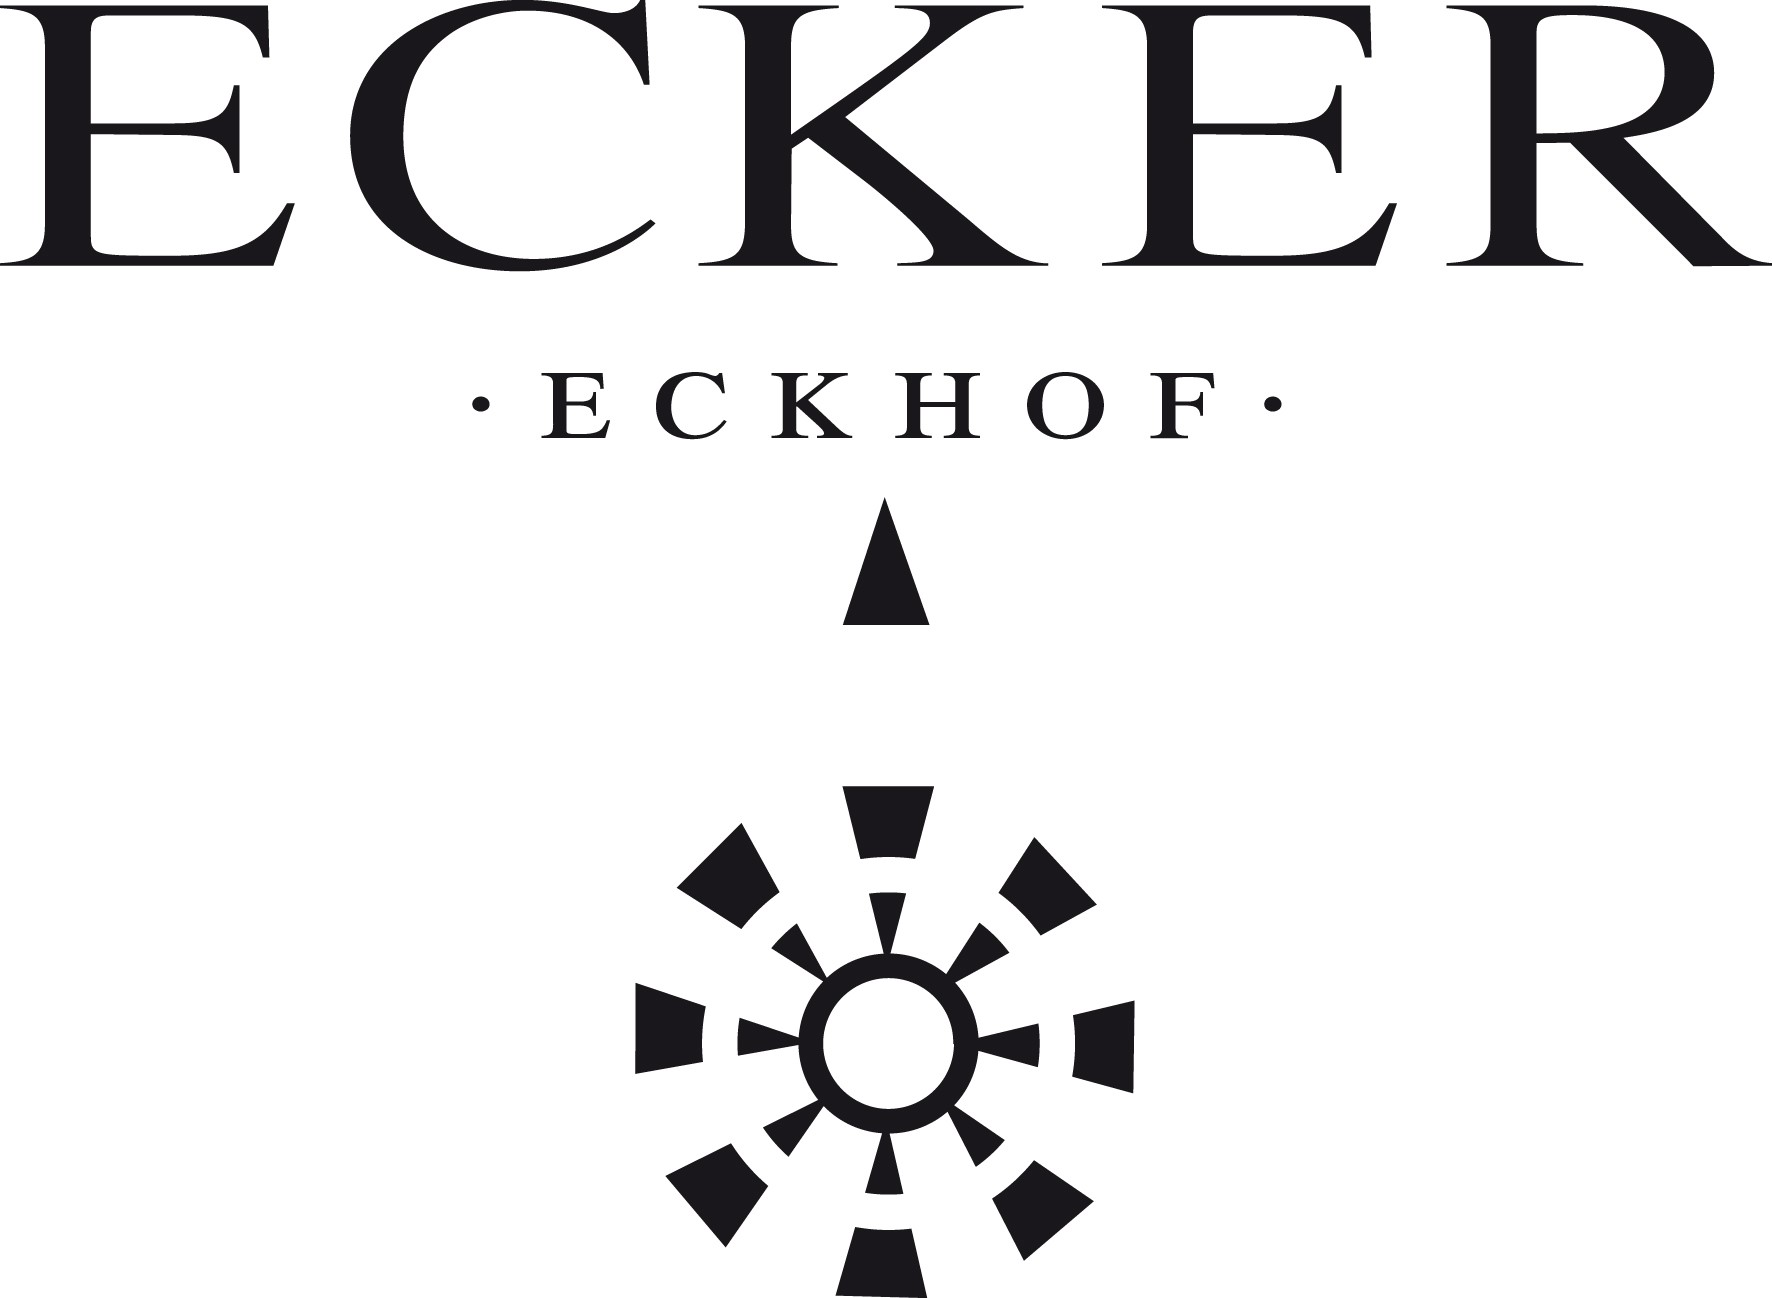 Weingut Ecker-Eckhof